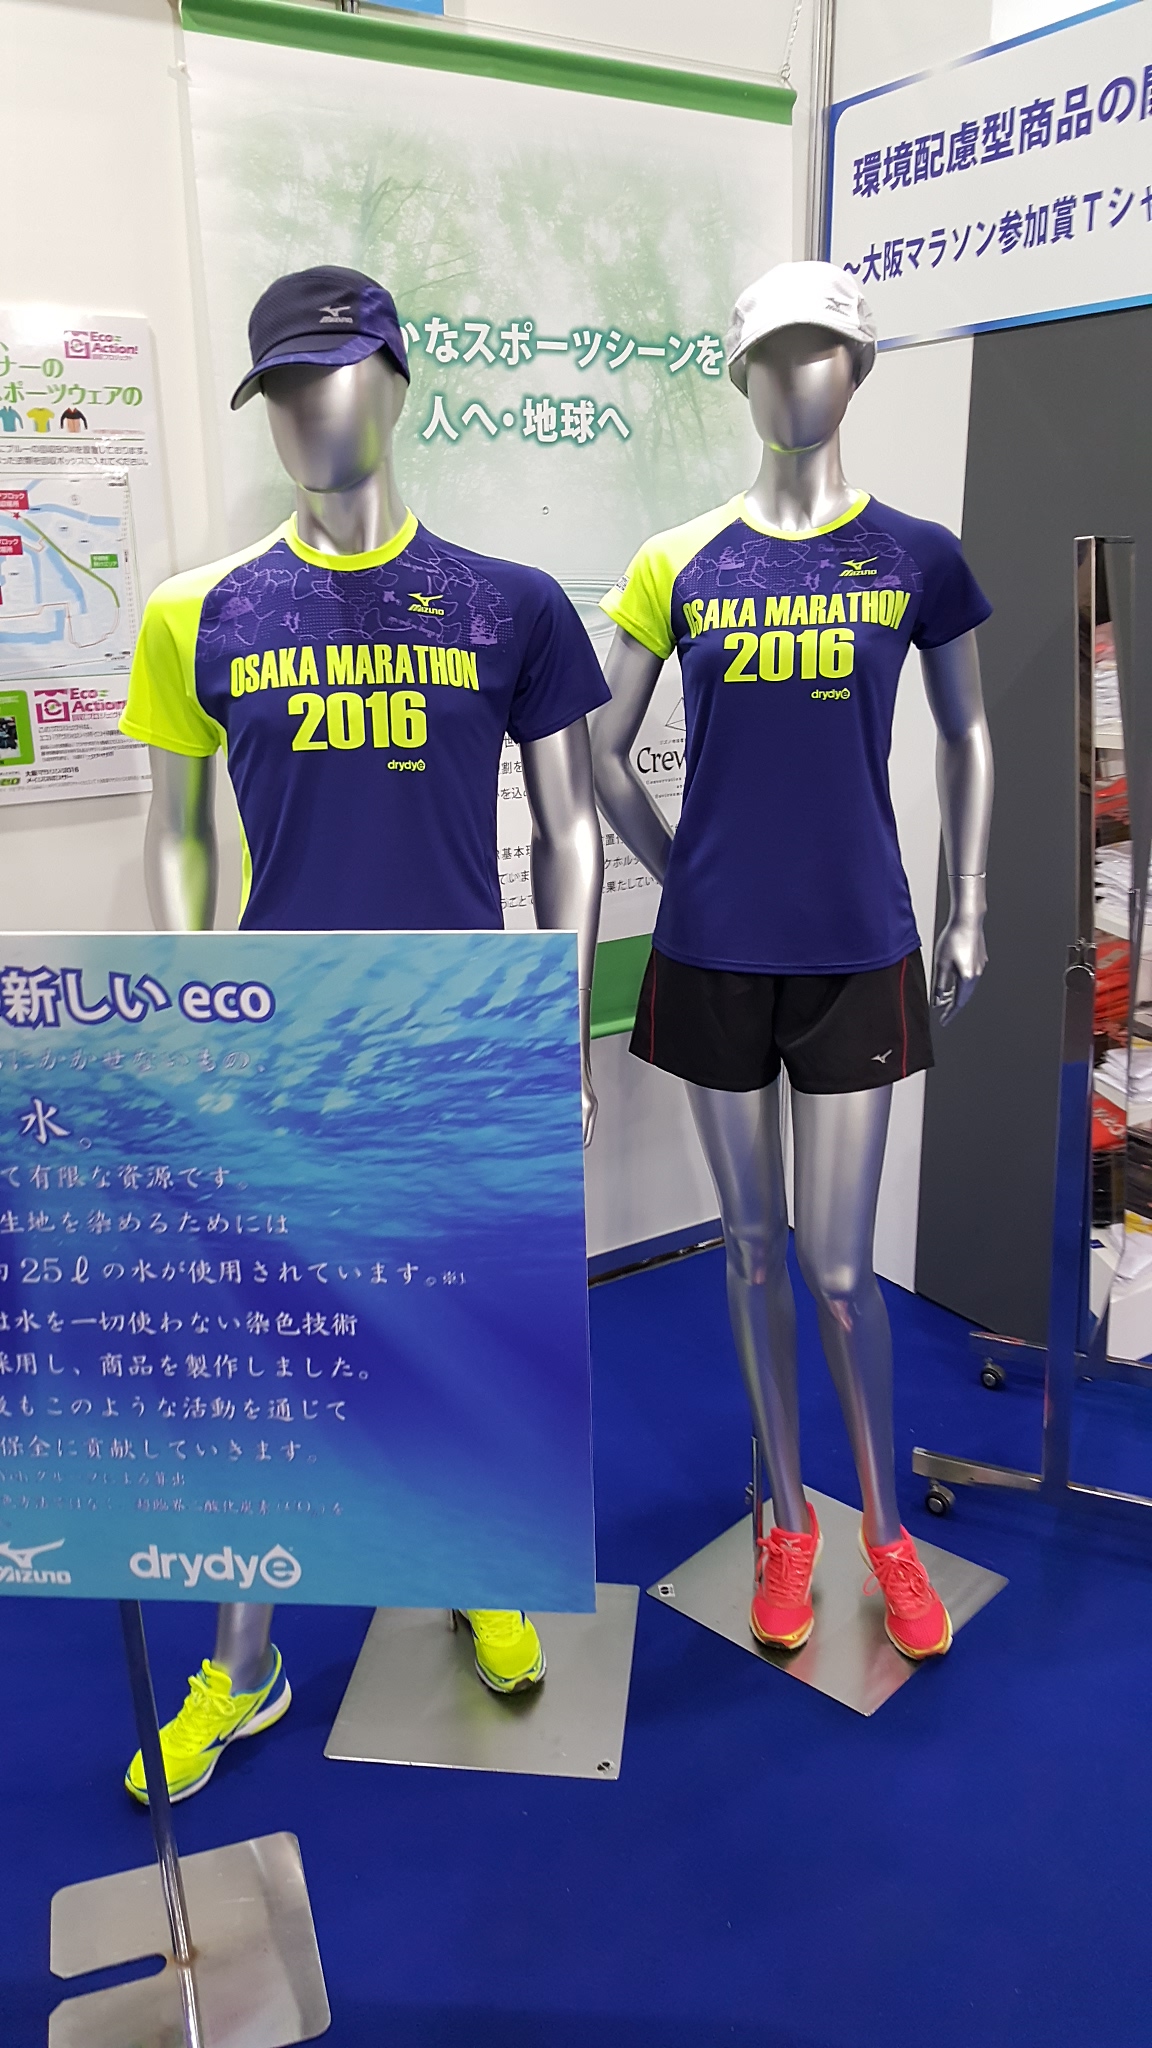 Race Review: Osaka Marathon 2016 